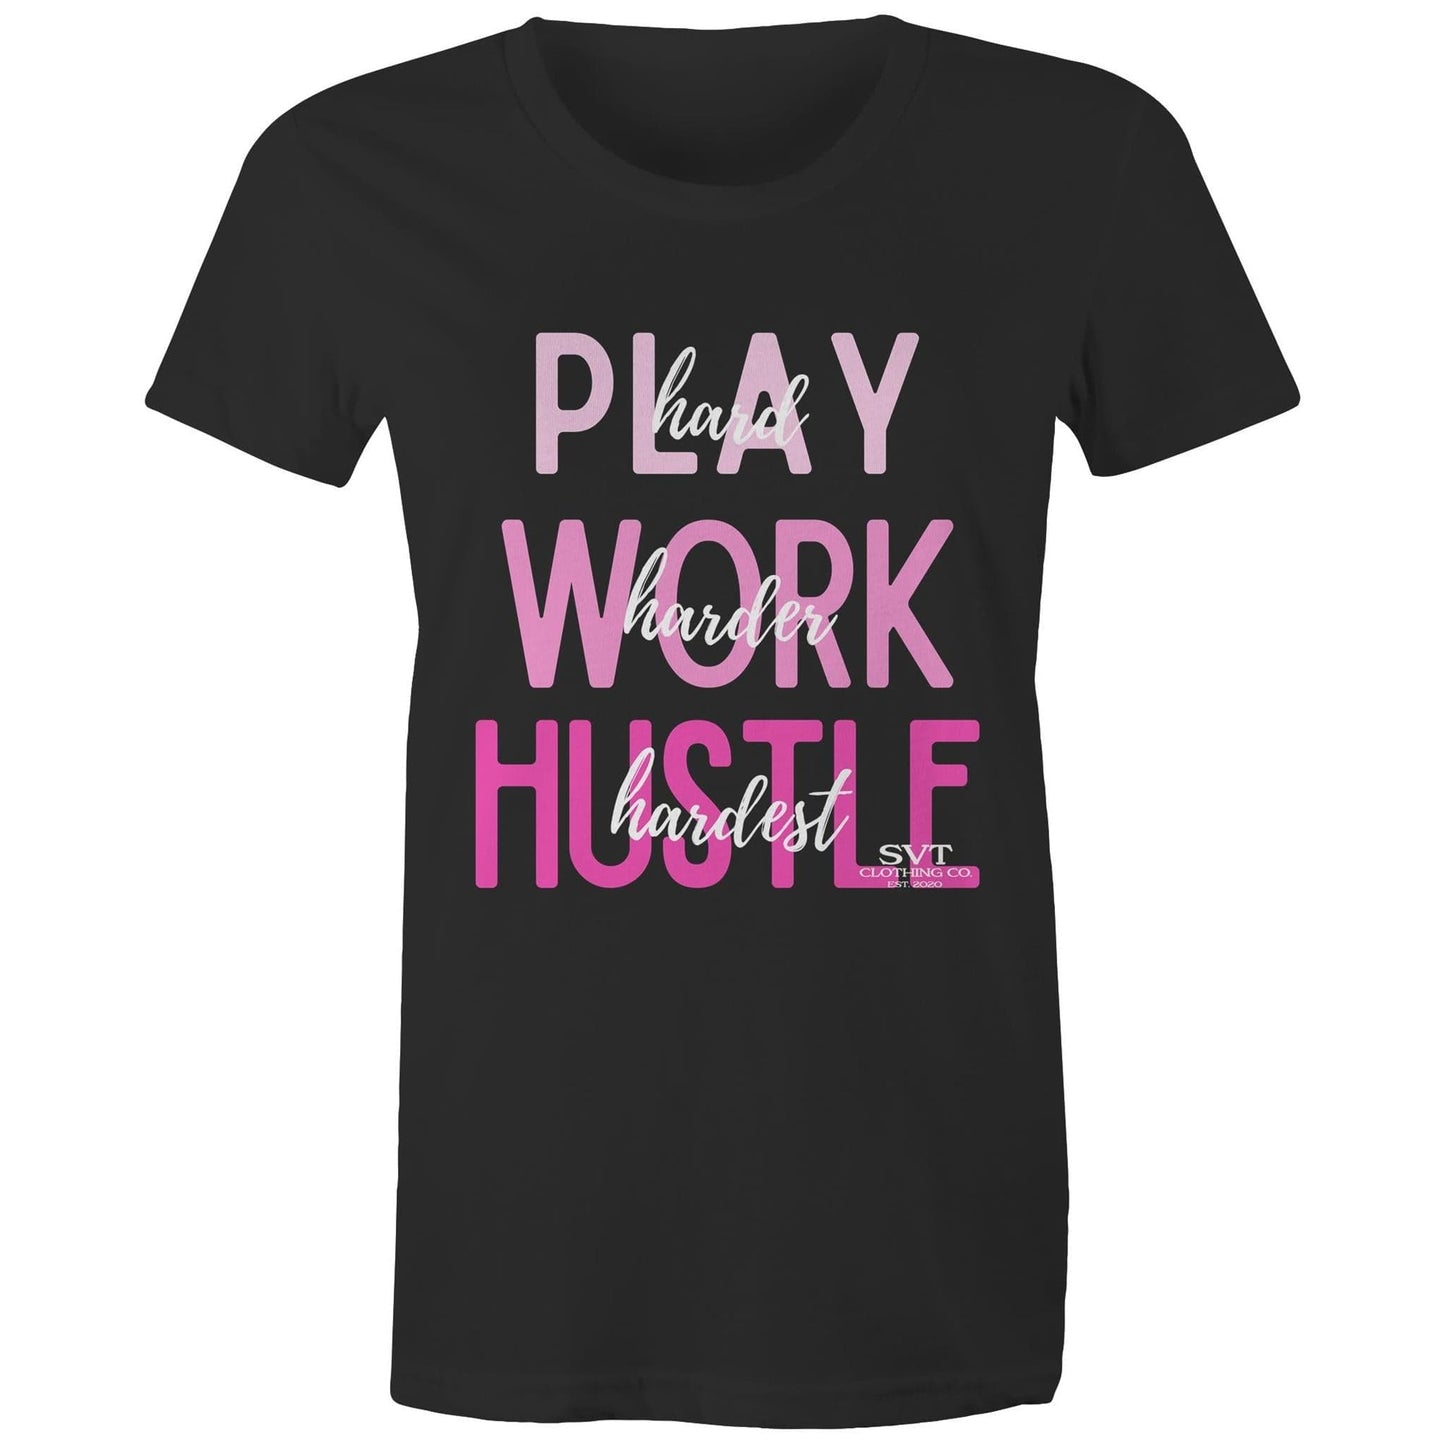 Ogo Merch Play Hard, Work Harder, Hustle Hardest Graphic Tee Pink Black / Extra Small